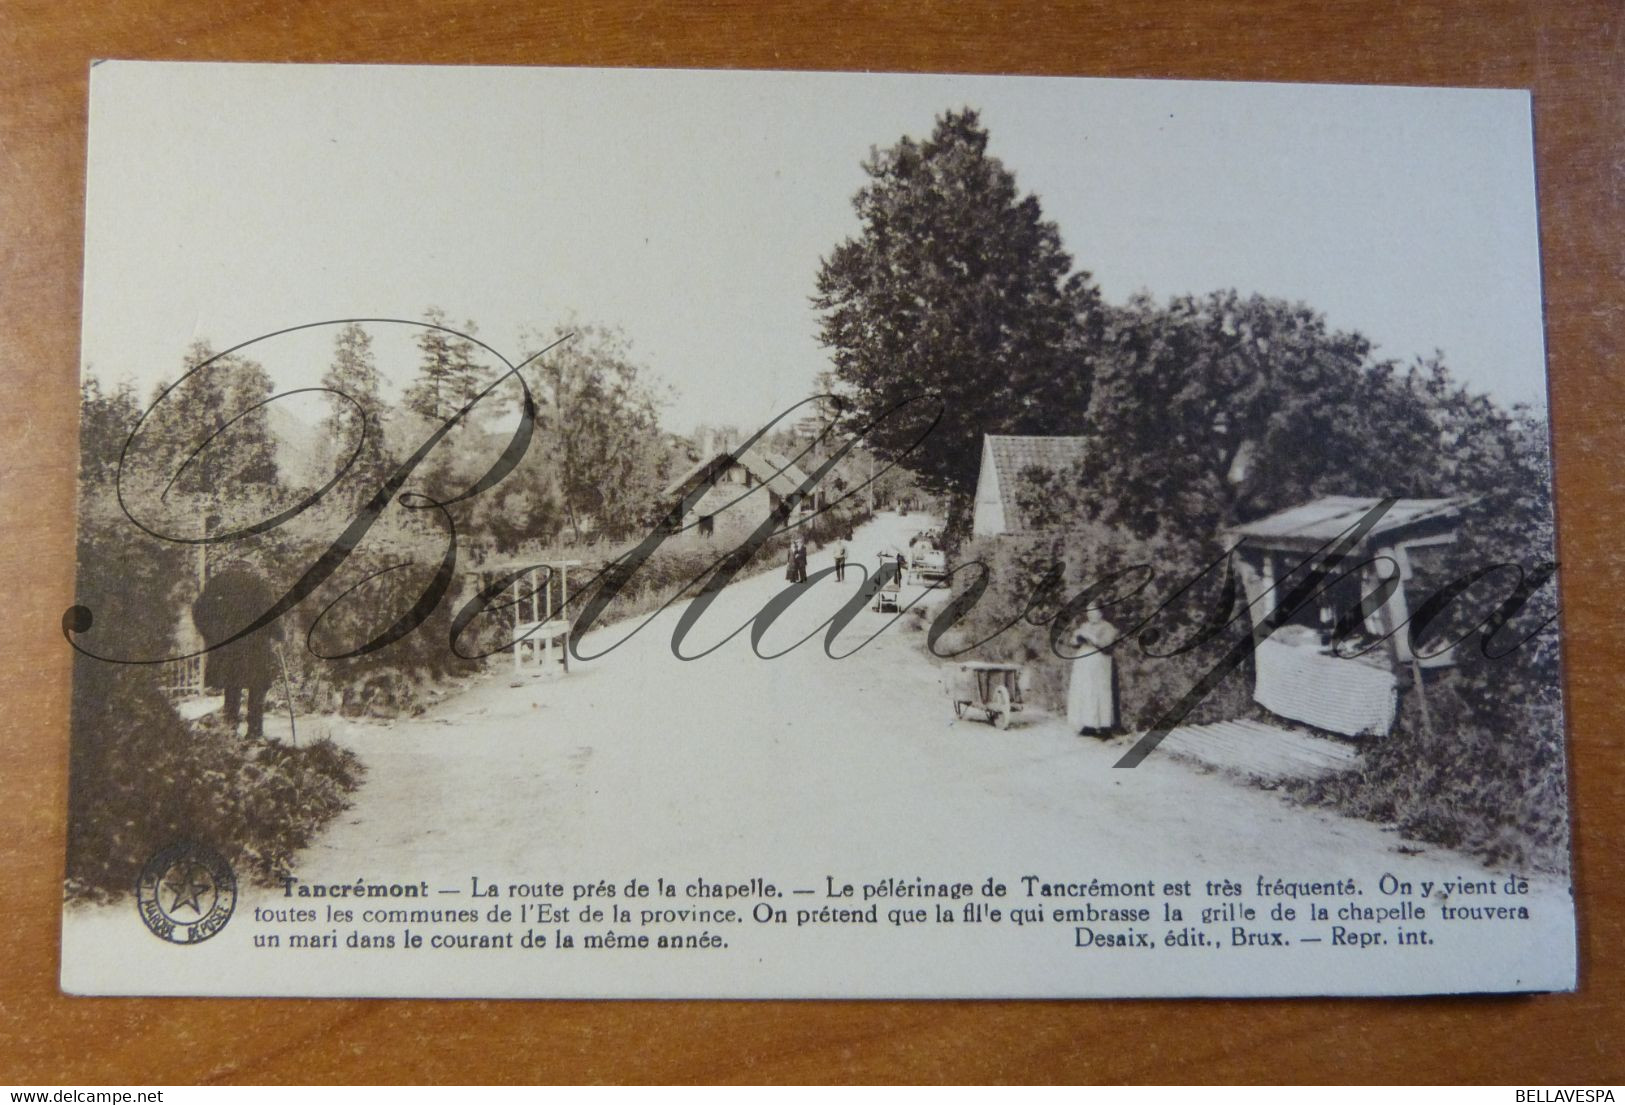 Postkaarten , cartes postales ancien CPA  Lot x 23 piece Provence de   Liége.